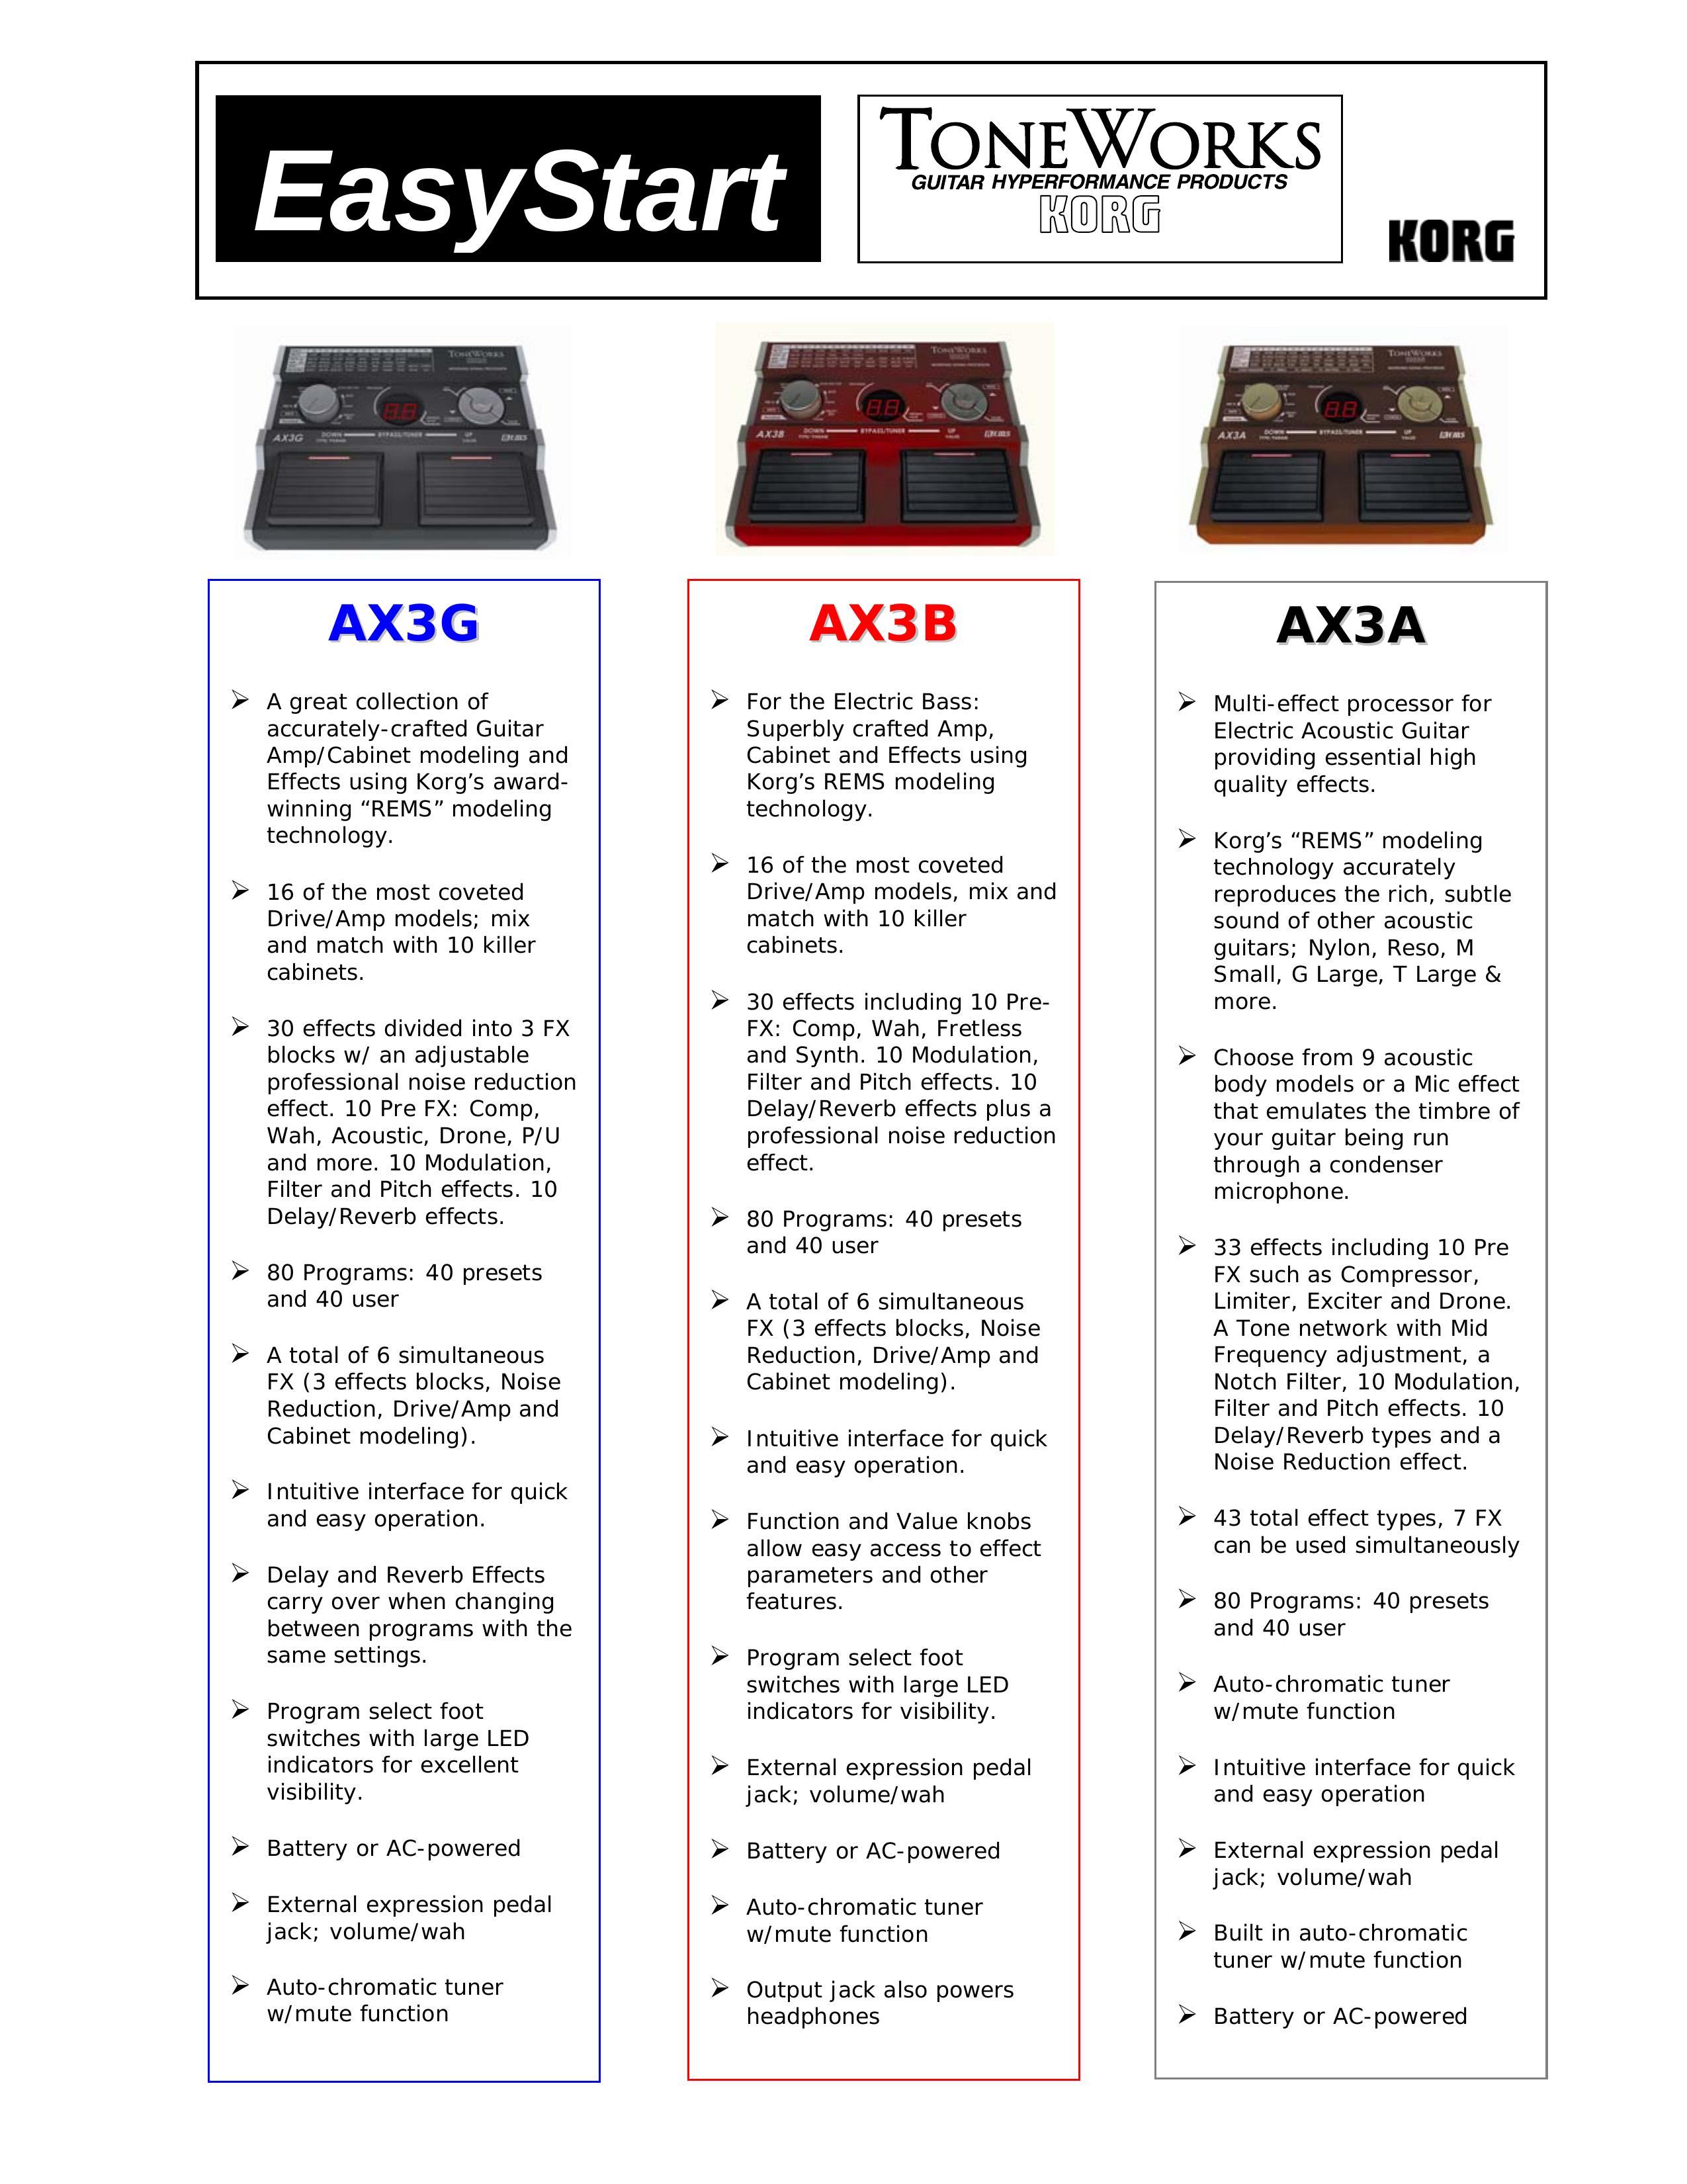 Korg AX3G Guitar User Manual